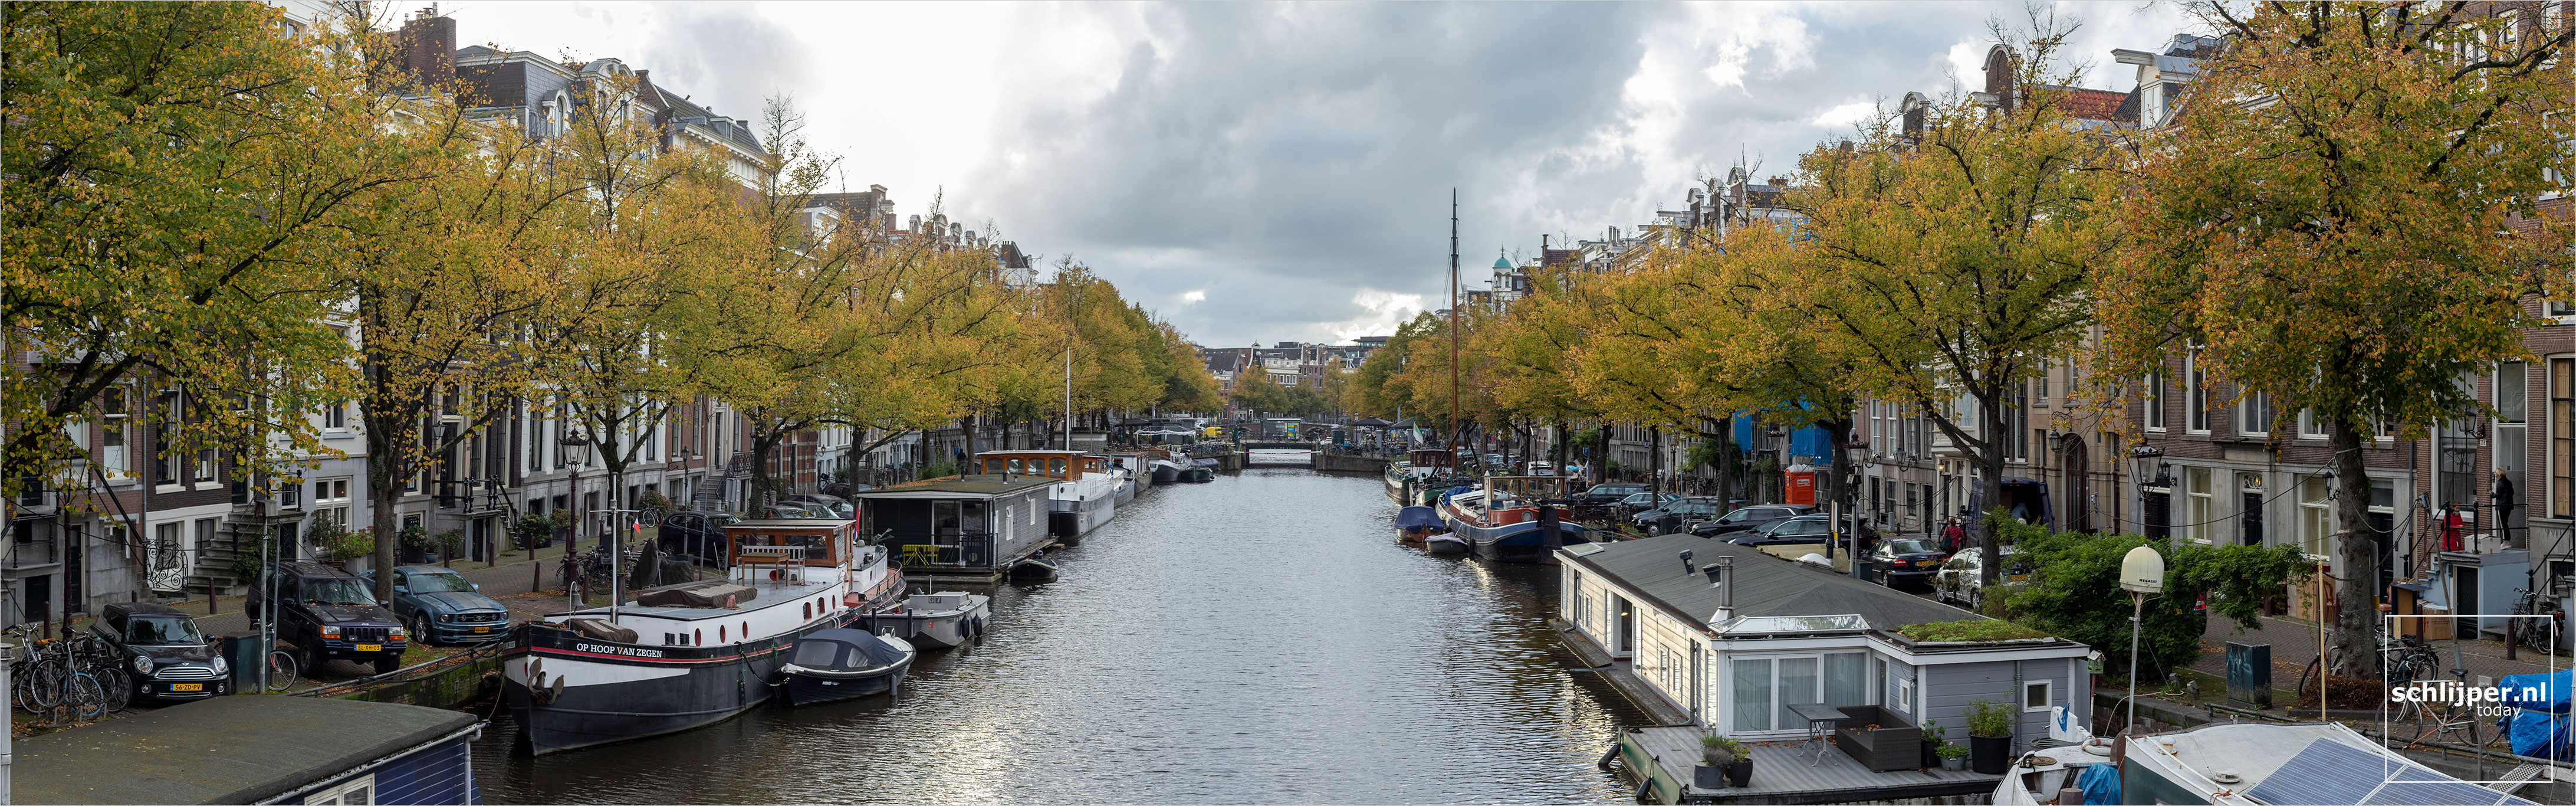 Nederland, Amsterdam, 7 oktober 2020